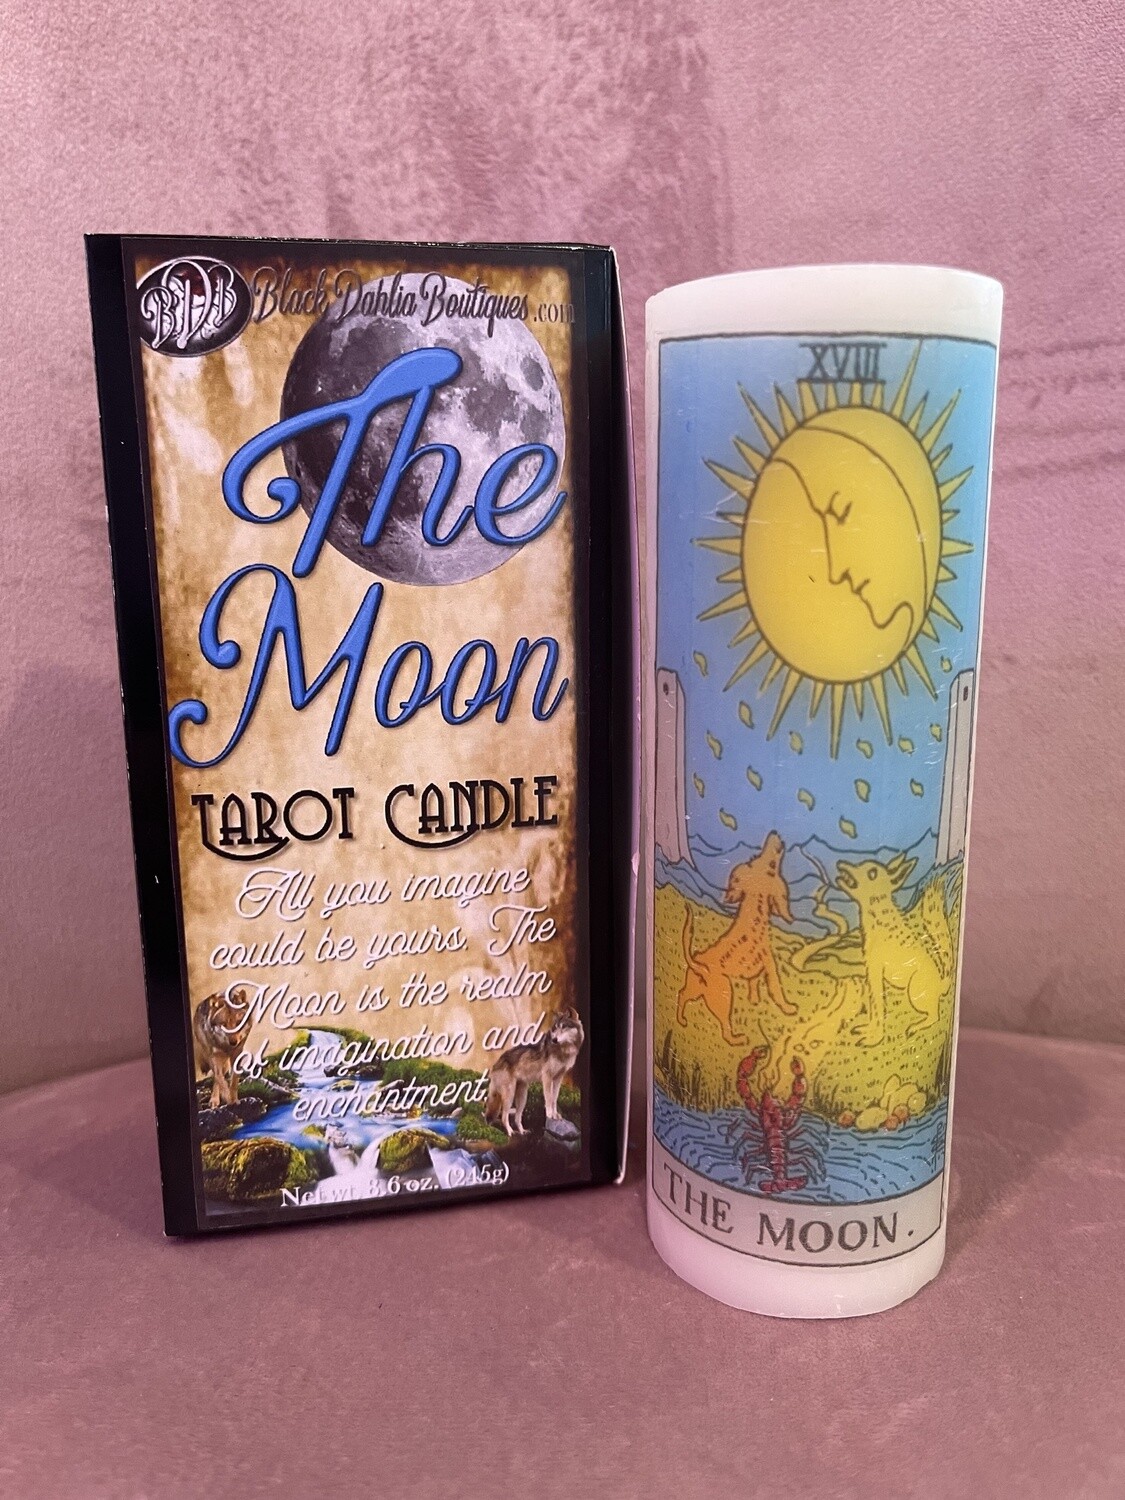 The Moon Tarot Candle